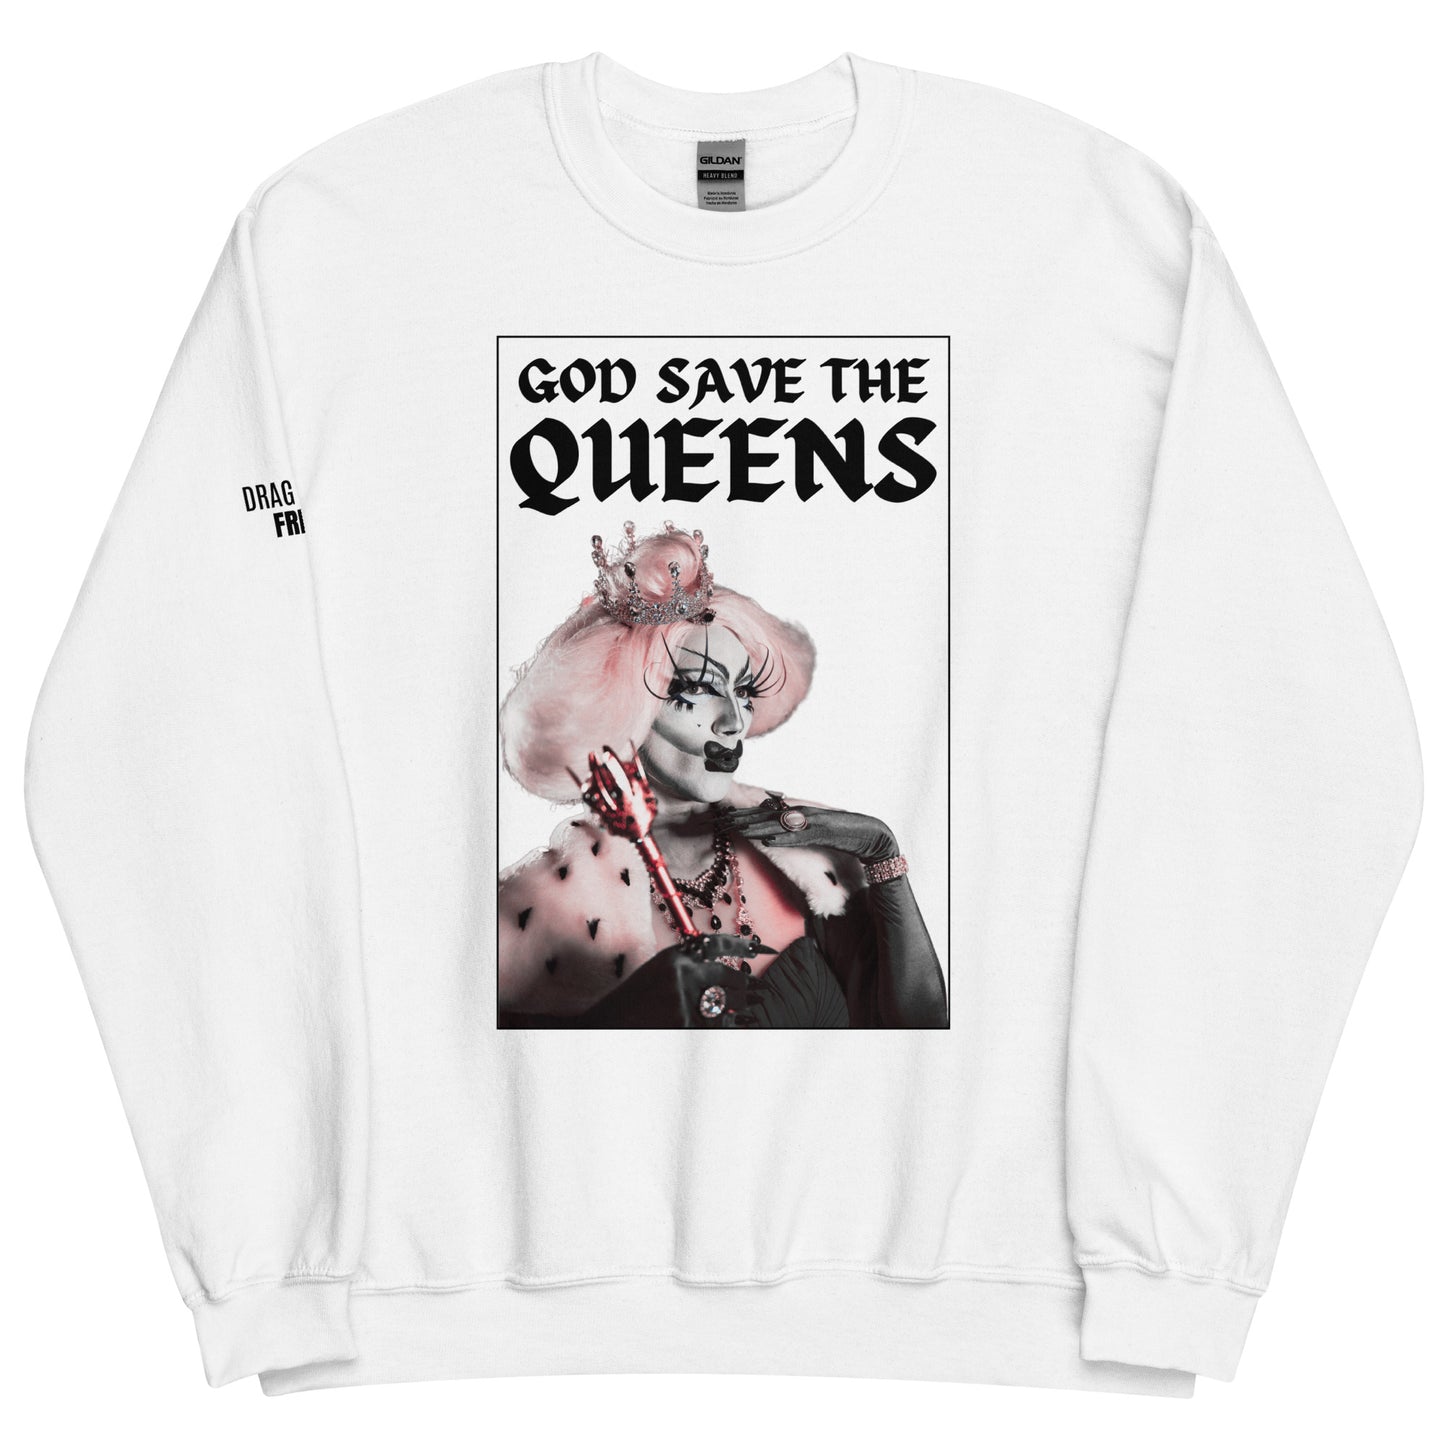 God Save the Queens Unisex Sweatshirt - Light Colors